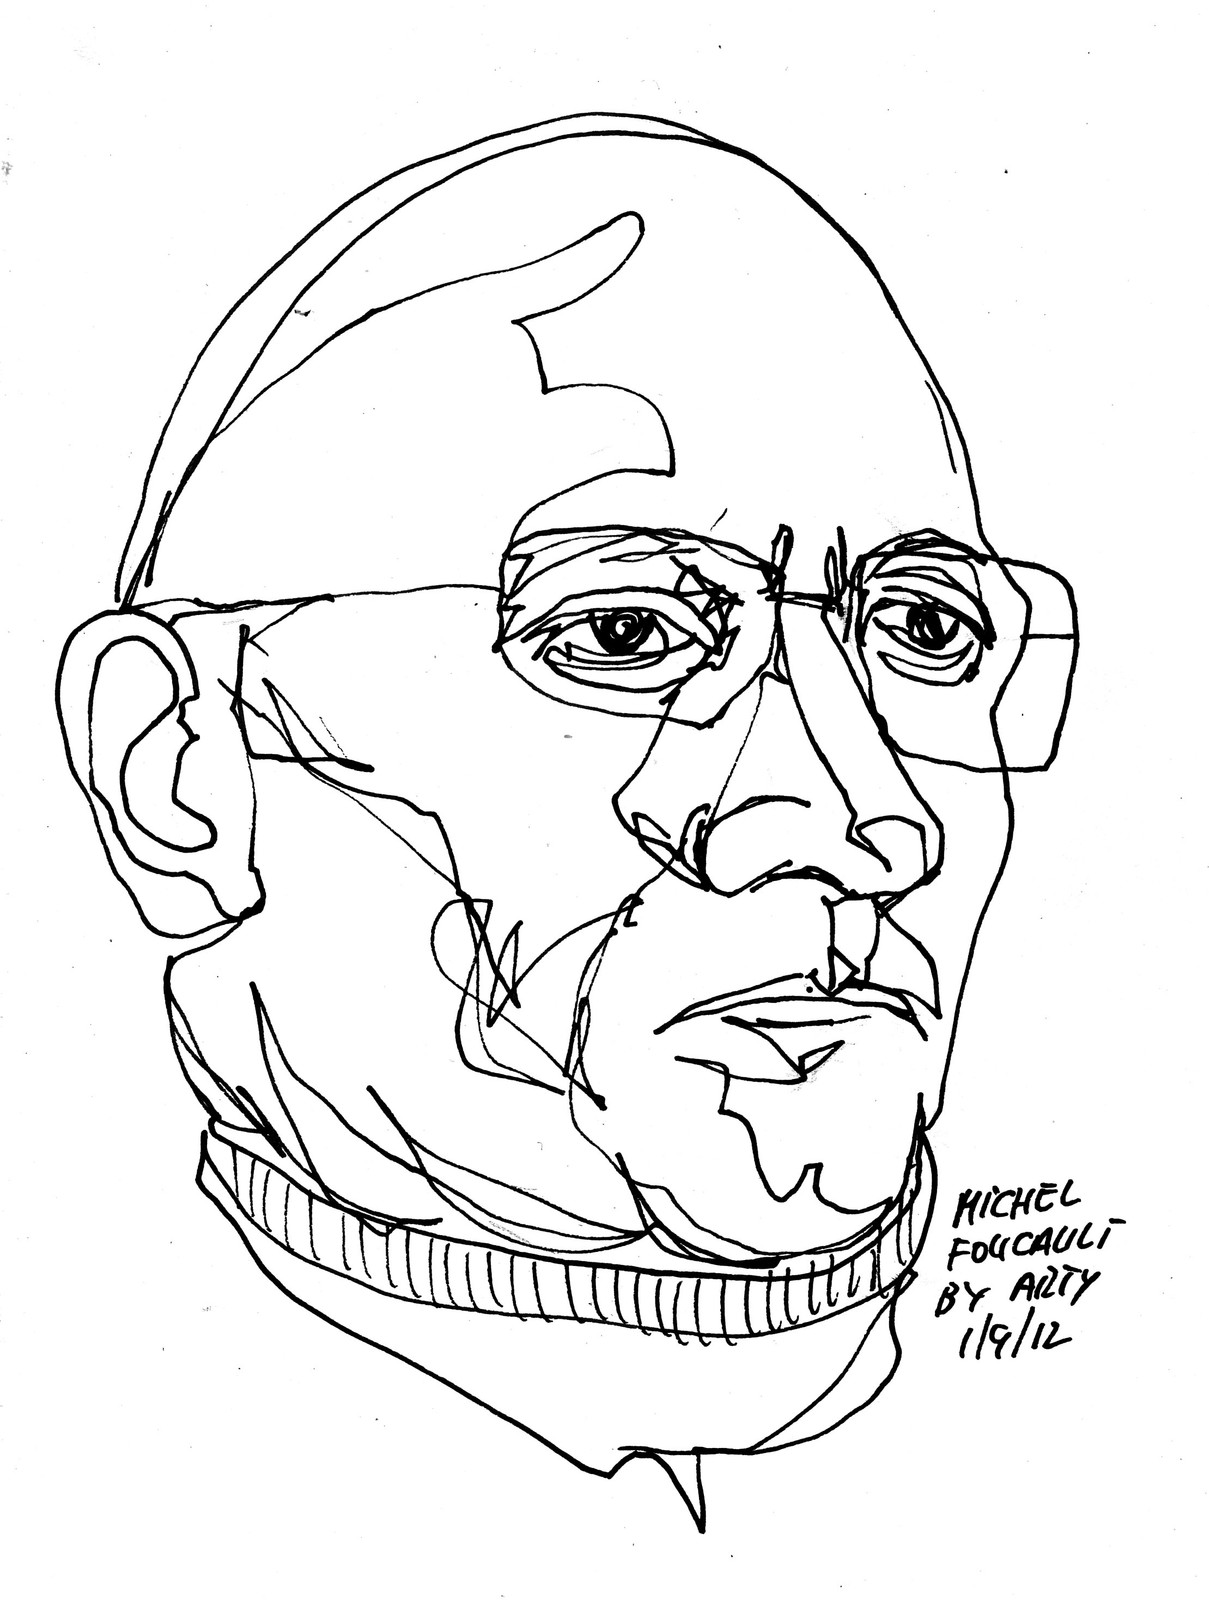 Michel Foucault, Arturo Espinosa, Flickr, CC BY 2.0